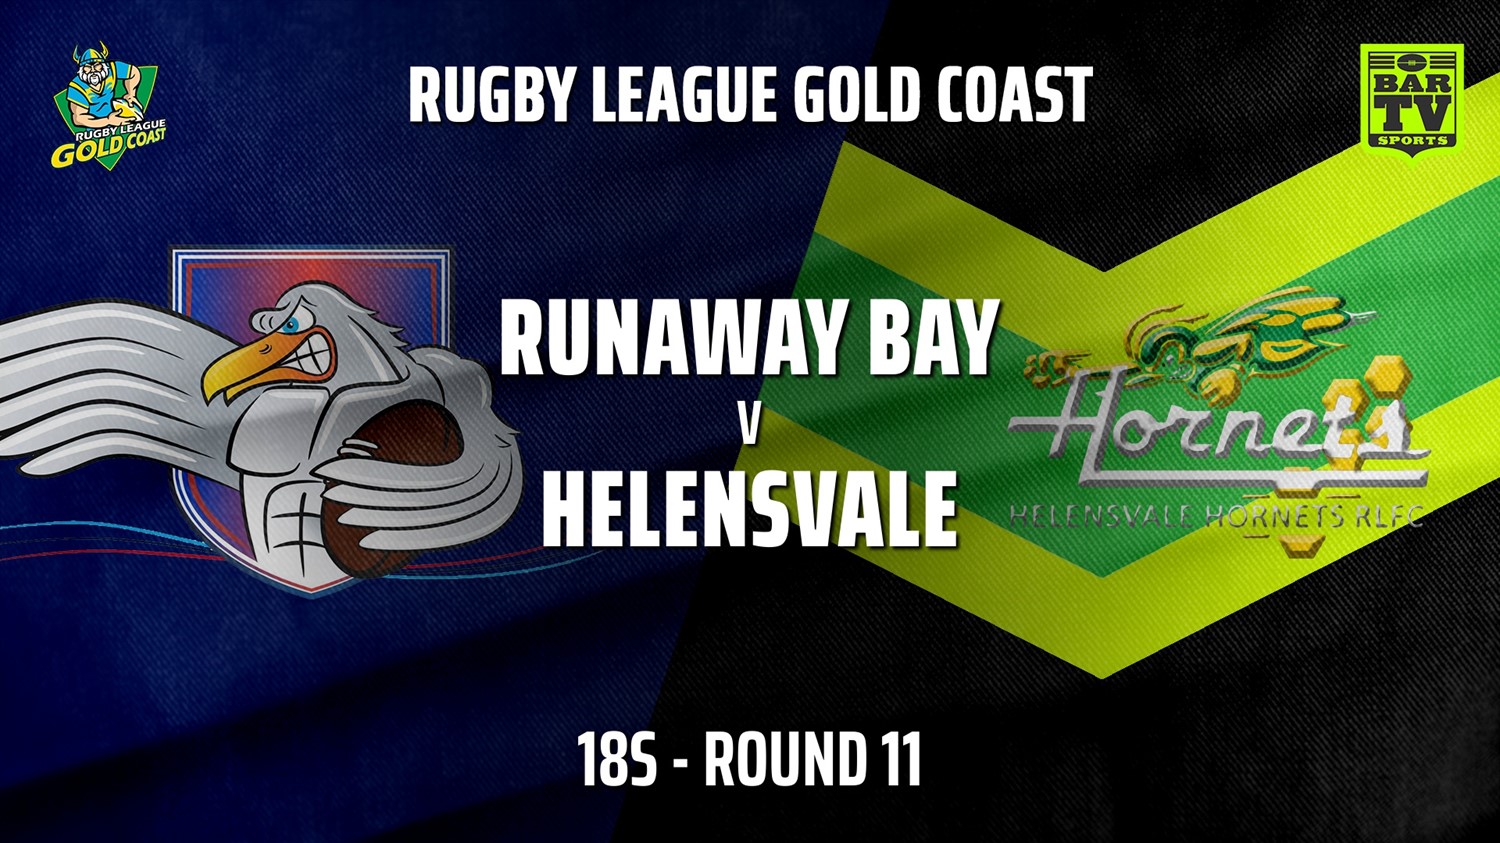 210829-Gold Coast Round 11 - 18s - Runaway Bay v Helensvale Hornets Slate Image